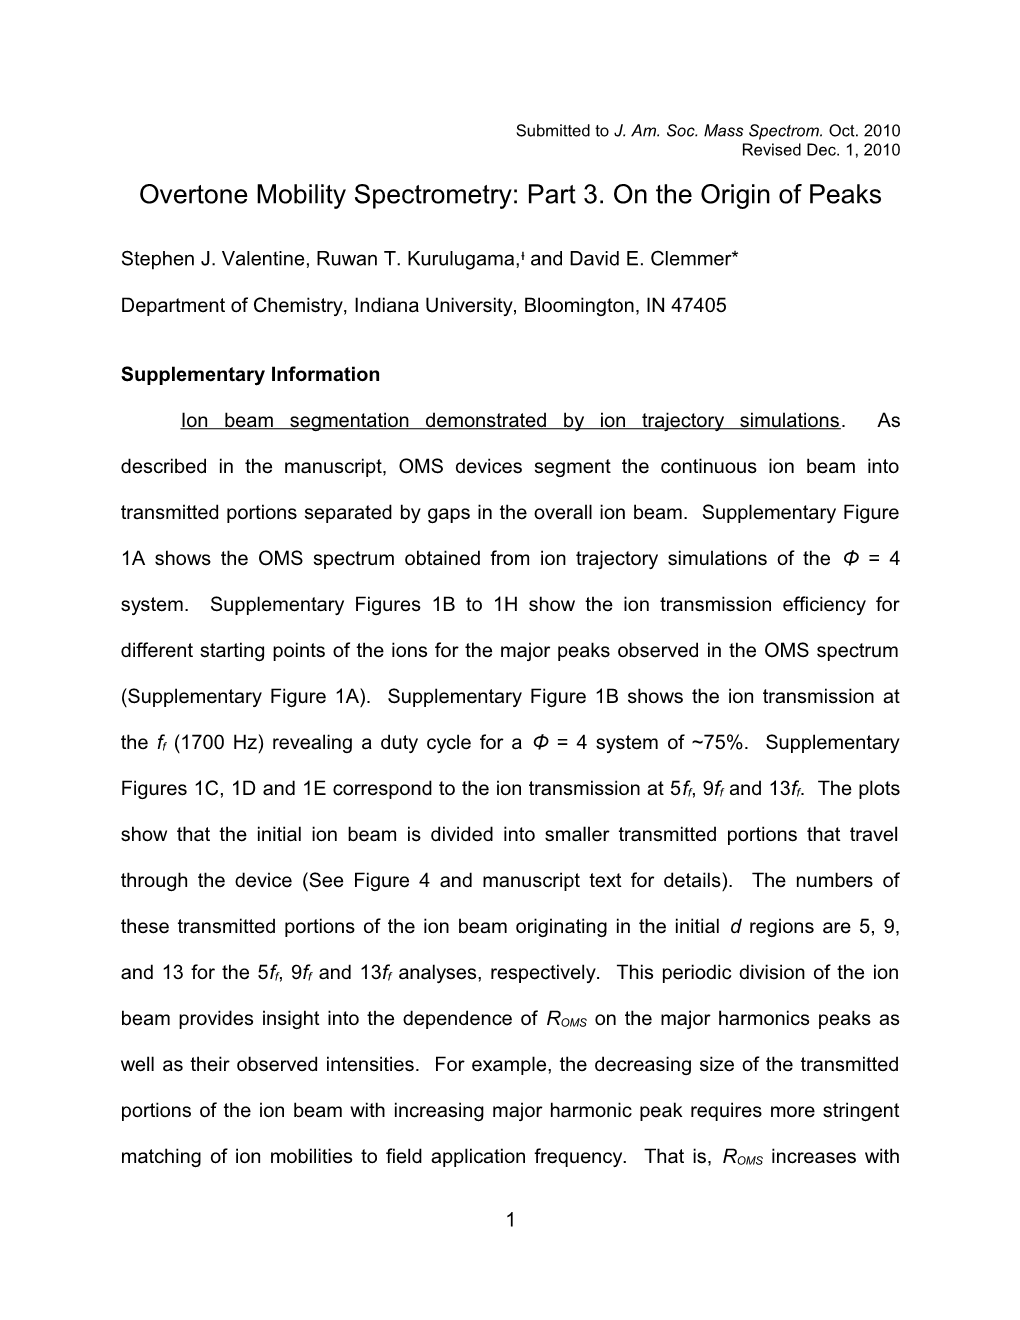 Origin of Peaks in Overtone Mobility Spectrometry